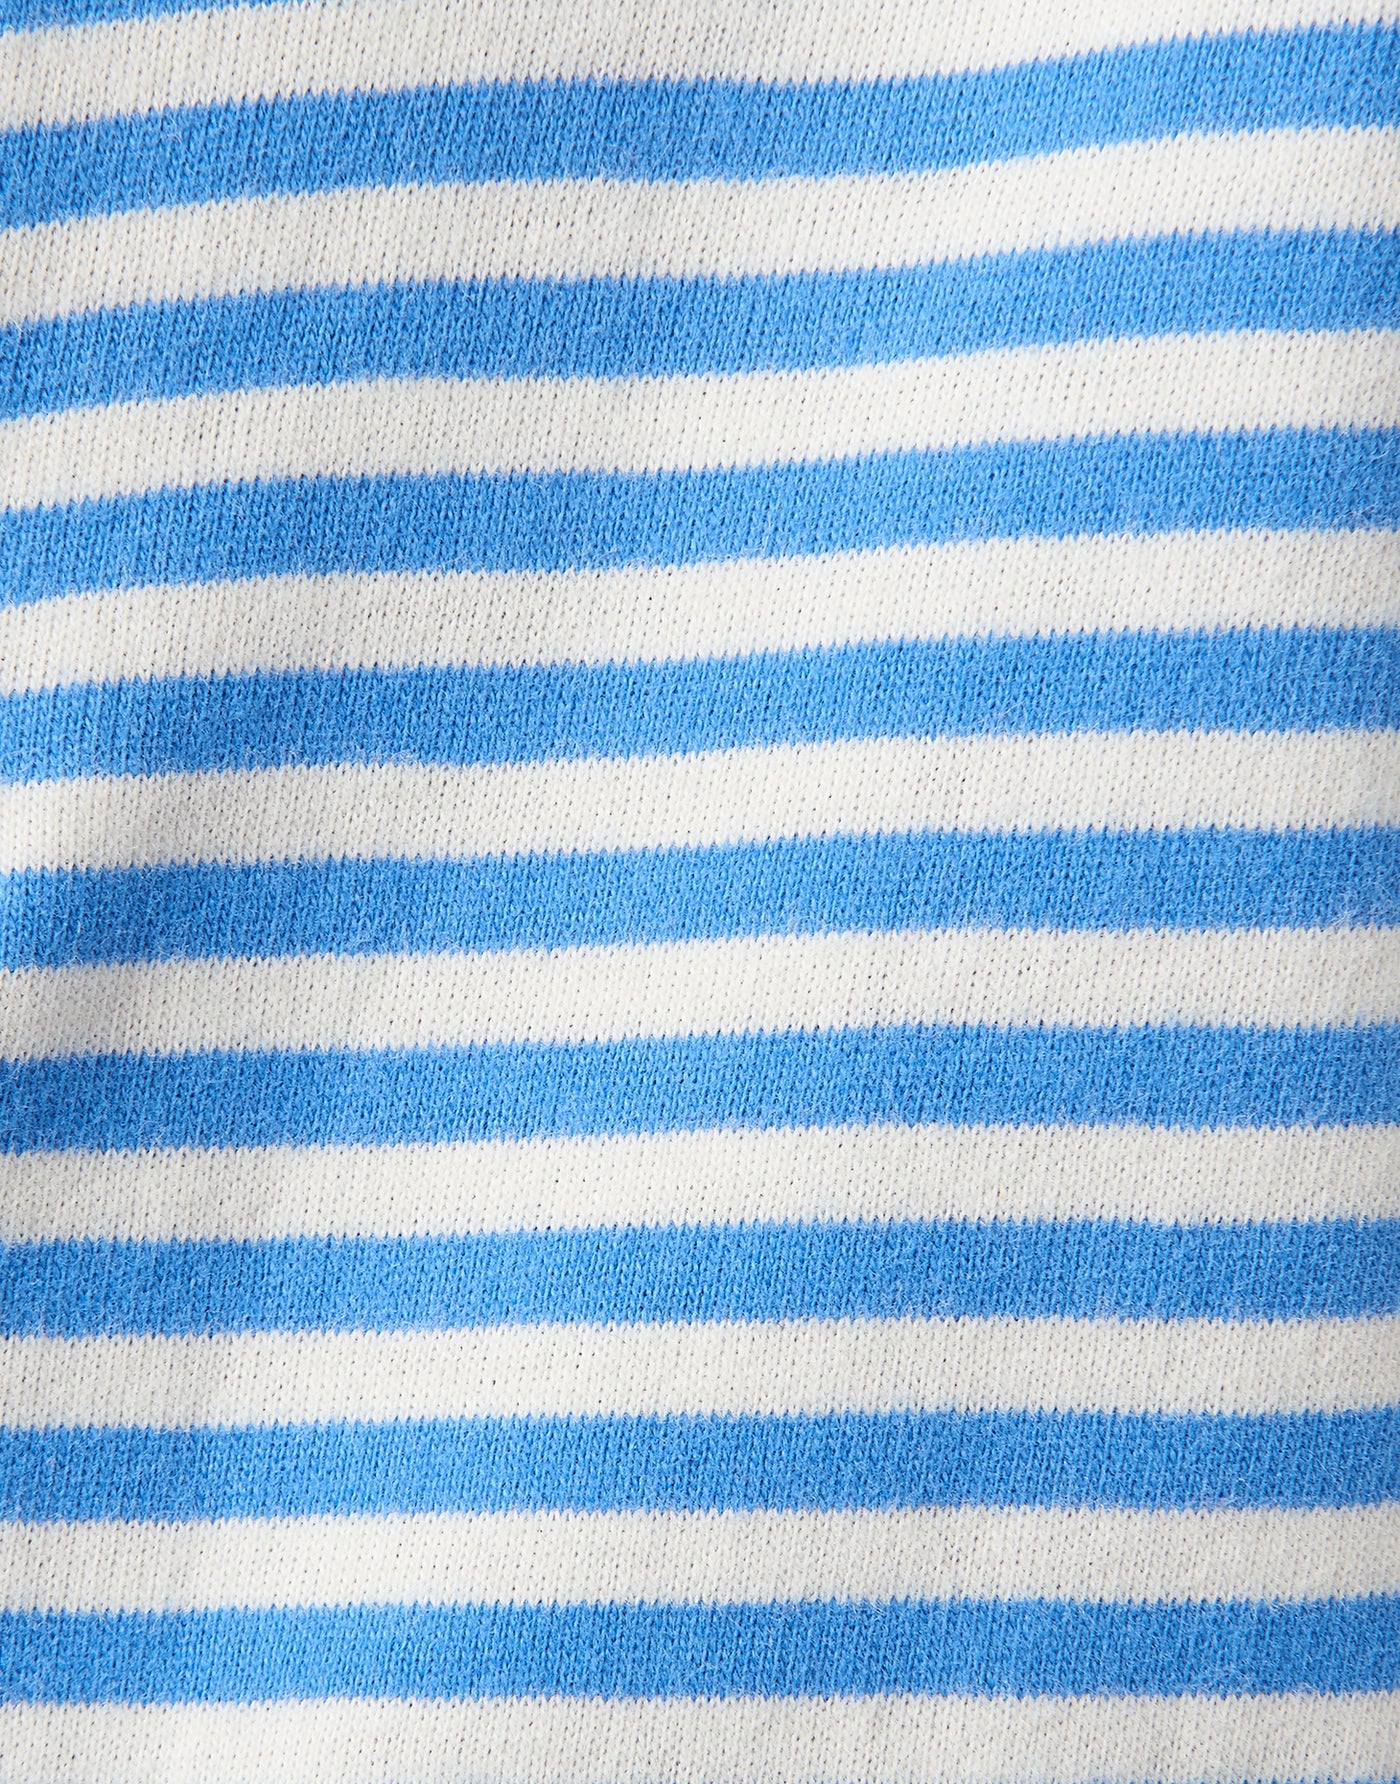 Joules Baby Bodysuit & Short Set - Blue Stripe